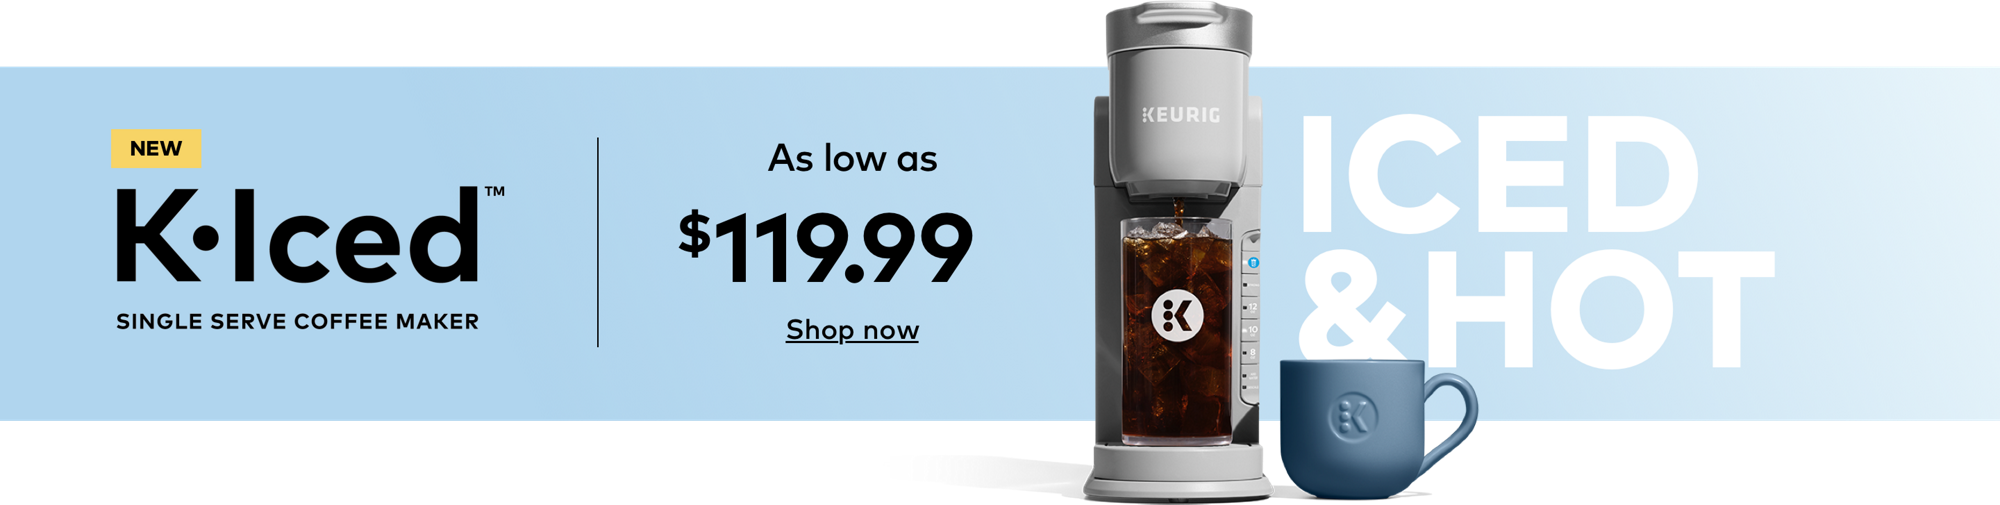 K-Iced(TM) Single serve coffee maker